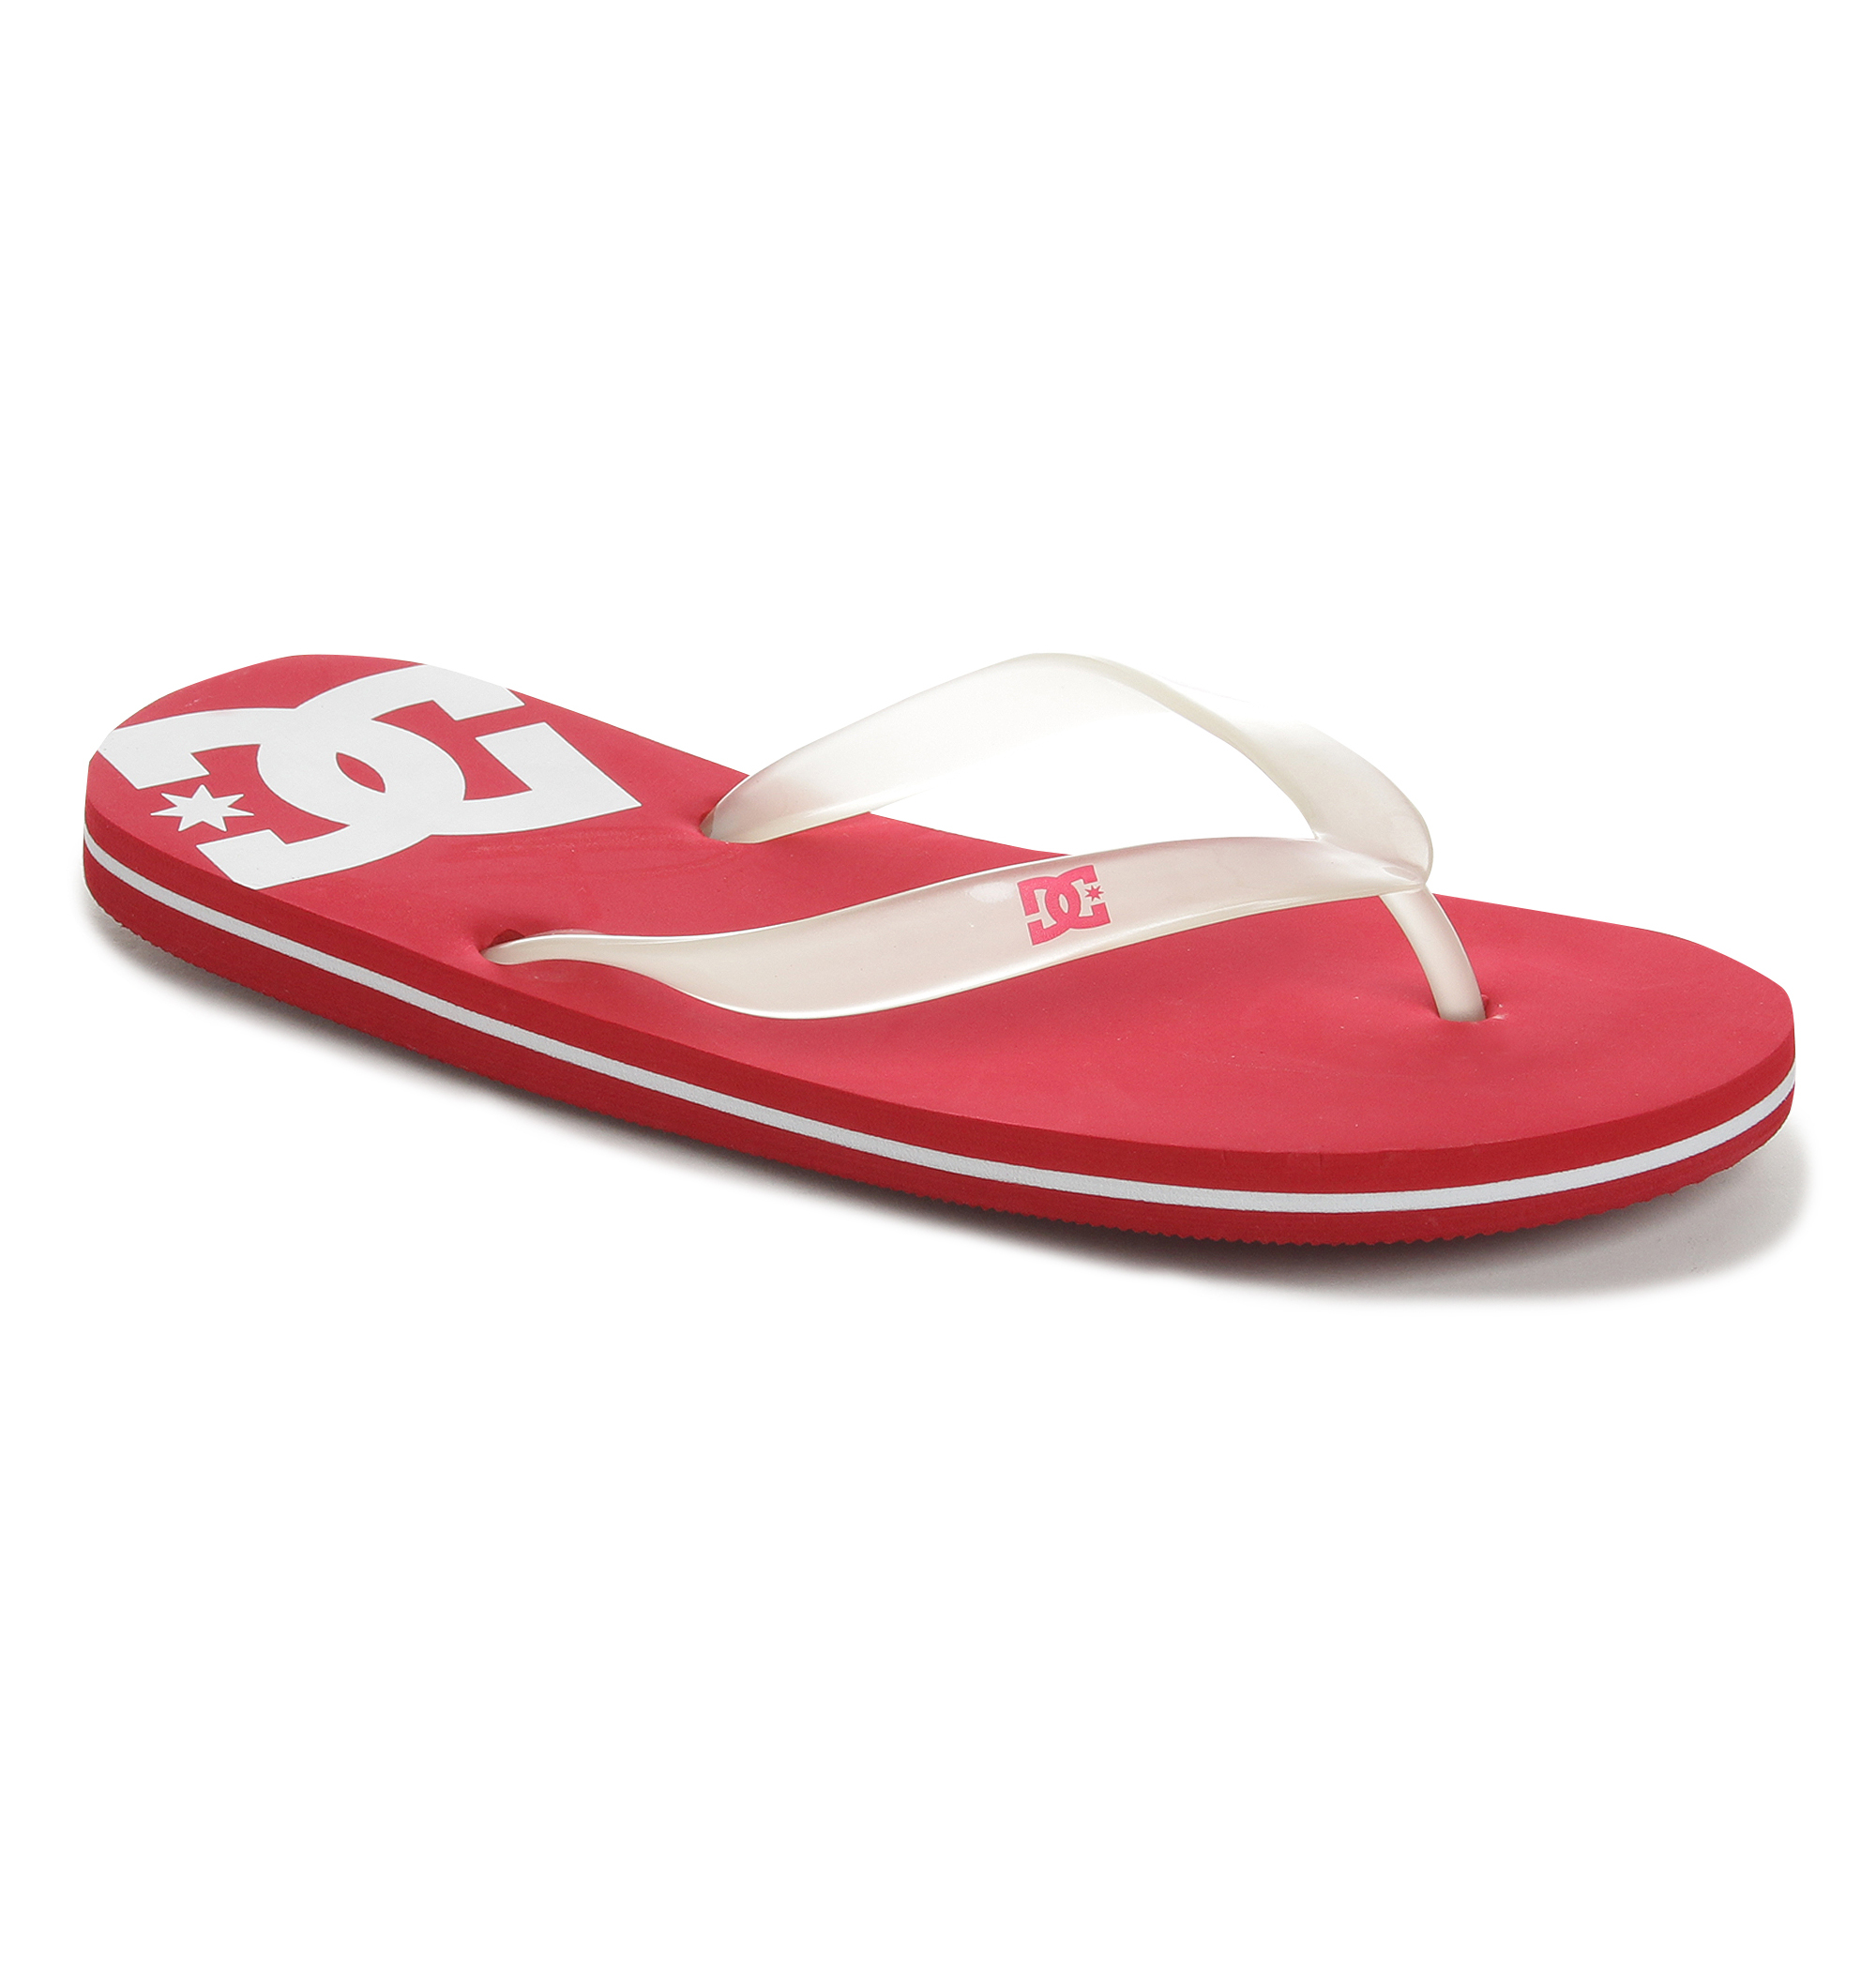 ＜DC Shoe＞ SPRAY GITD 大きく配したブランドロゴが存在感溢れるビーチサンダル